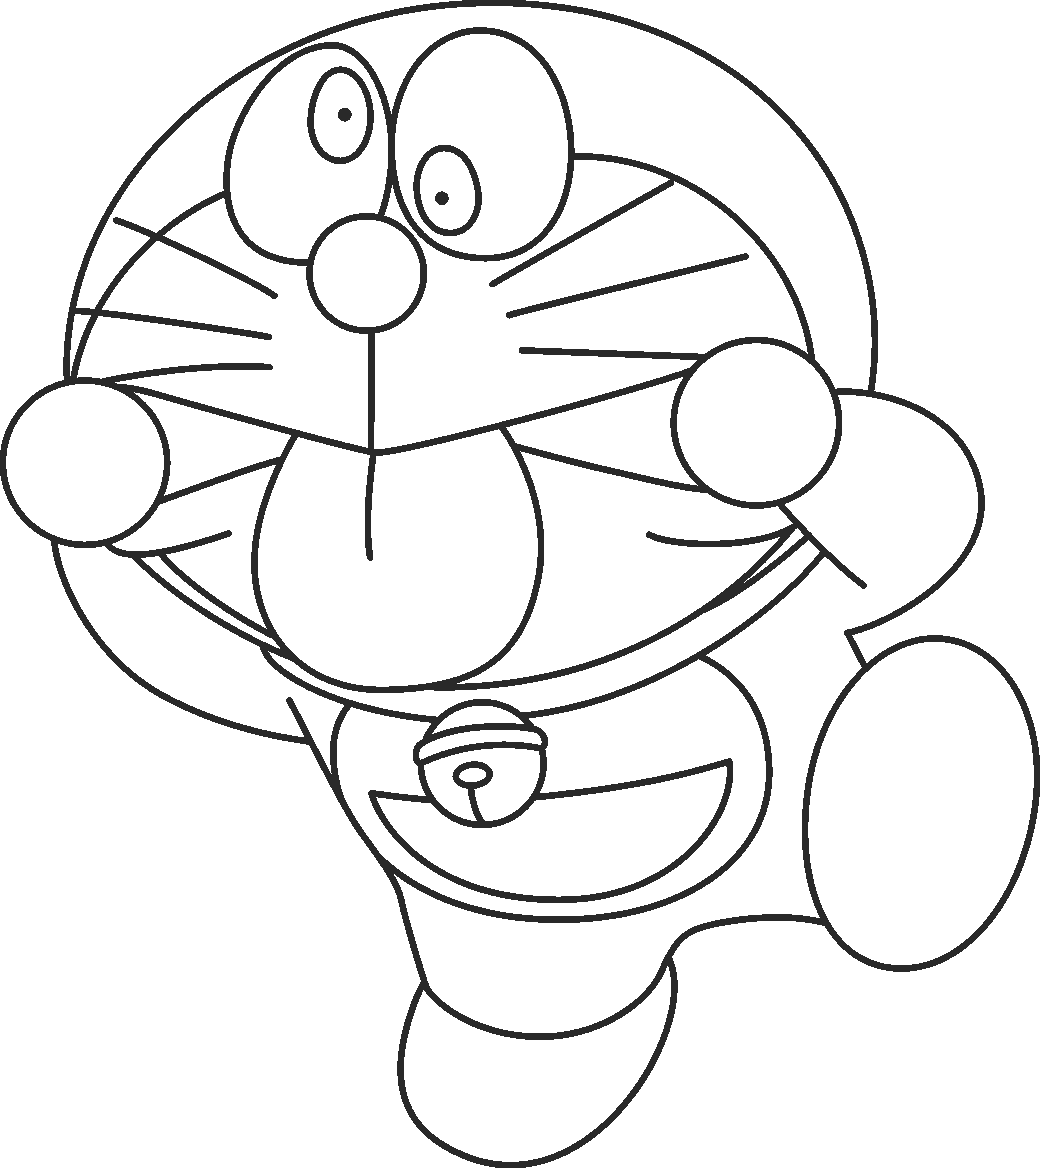 Gambar Mewarnai Doraemon ~ Gambar Mewarnai Lucu